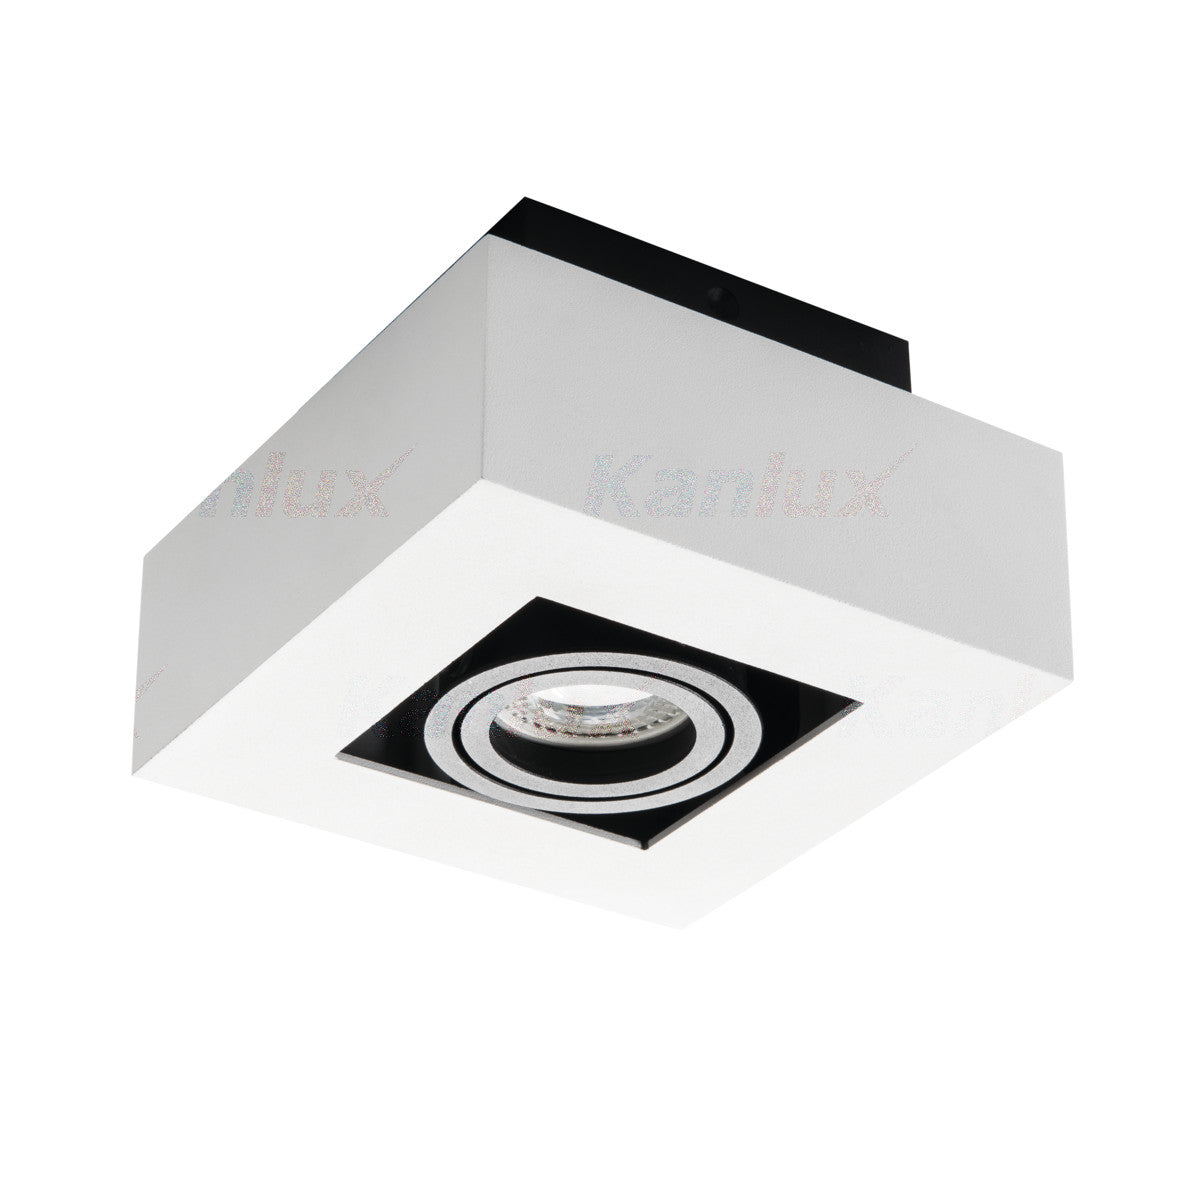 Kanlux STOBI Spot Ceiling Mounted Square Adjustable Tilt Angle GU10 Light Decorative